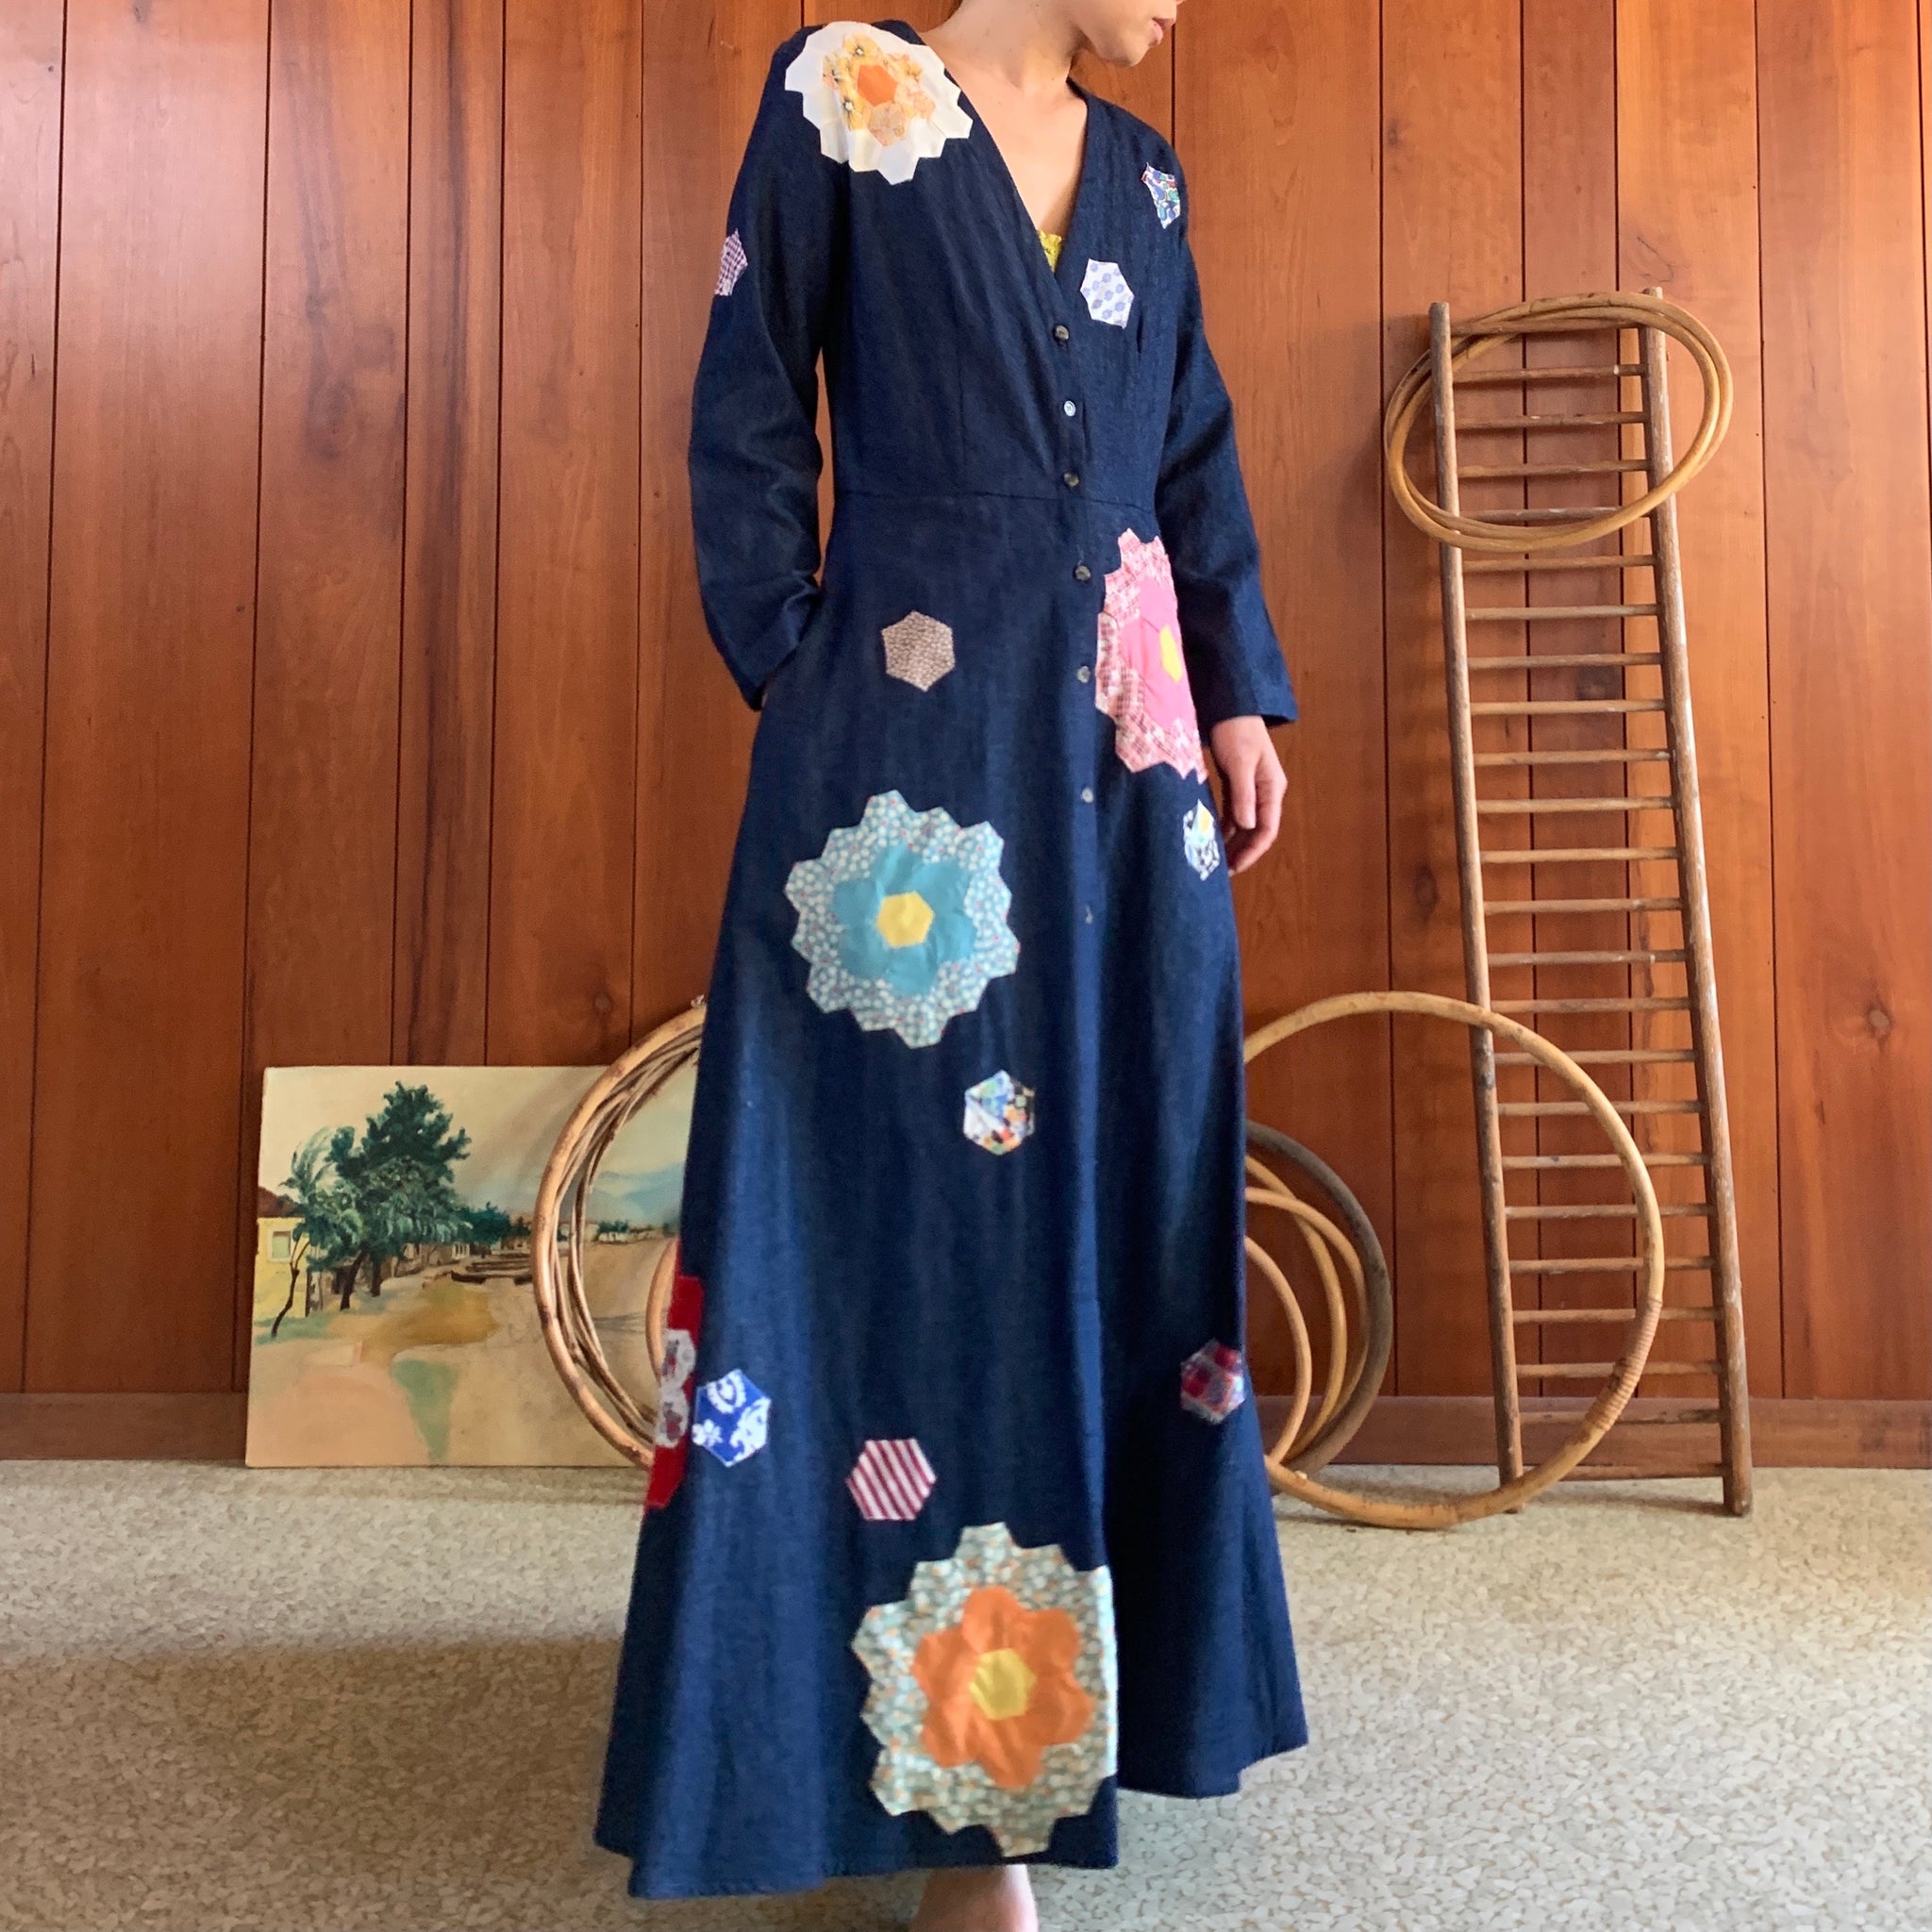 Denim Dress with Quilted Grandmothers flower garden